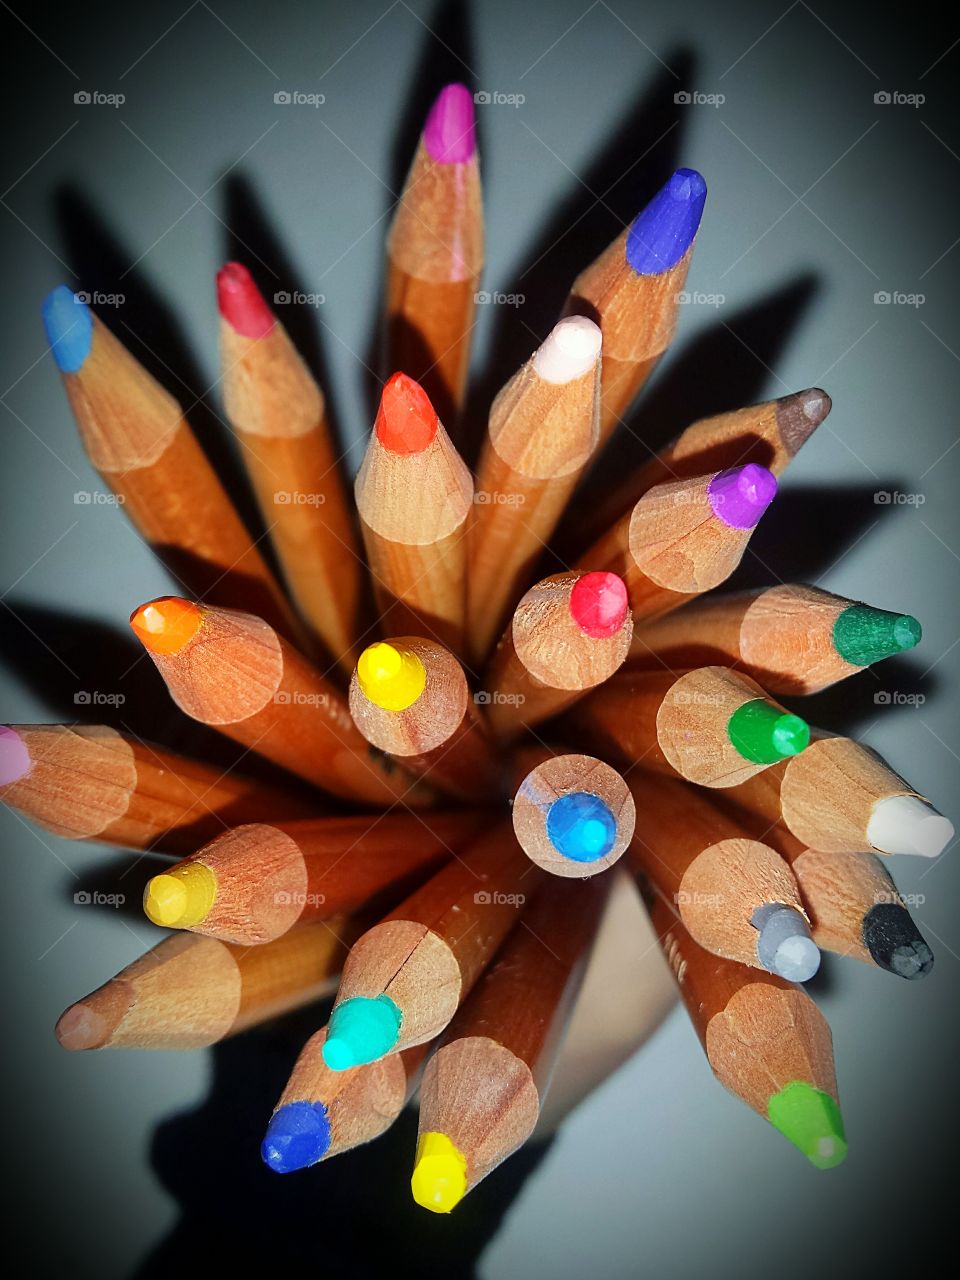 I love colored pencils